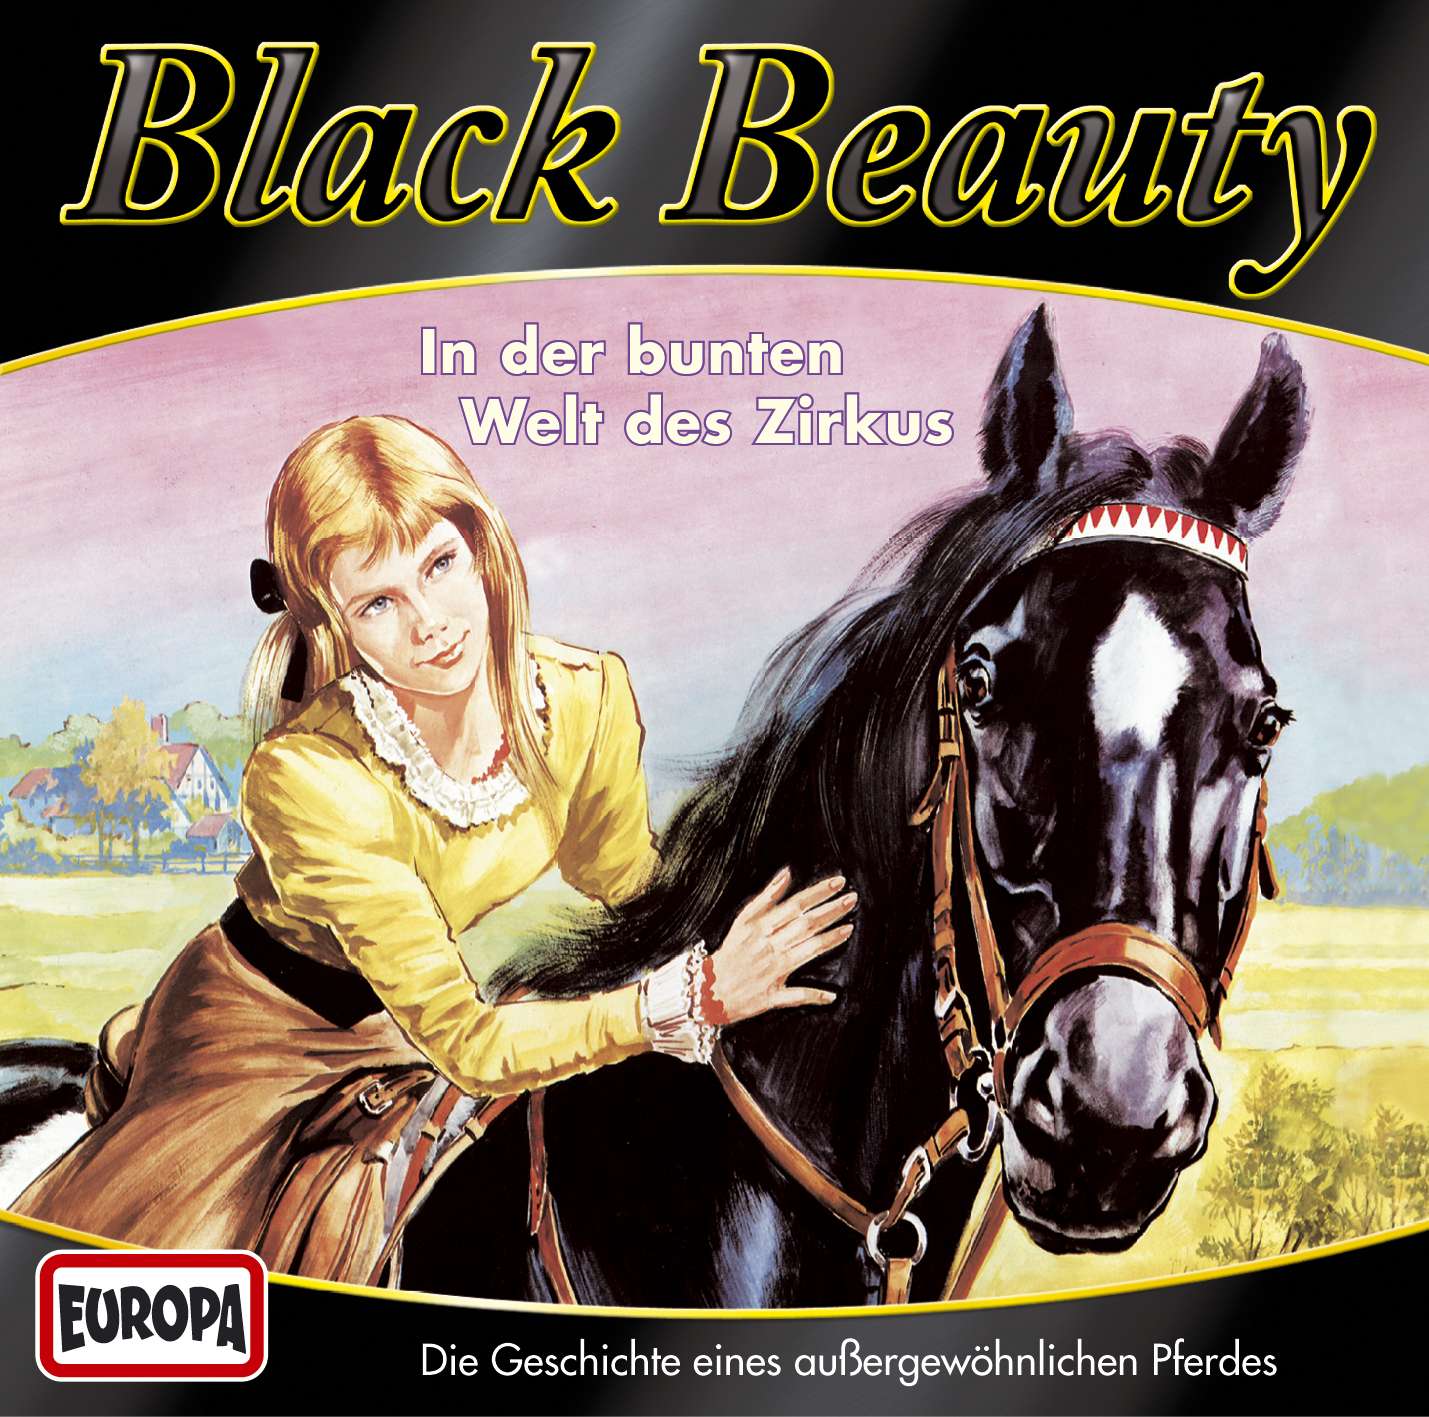 Black Beauty - Black Beauty - In der bunten Welt des Zirkus